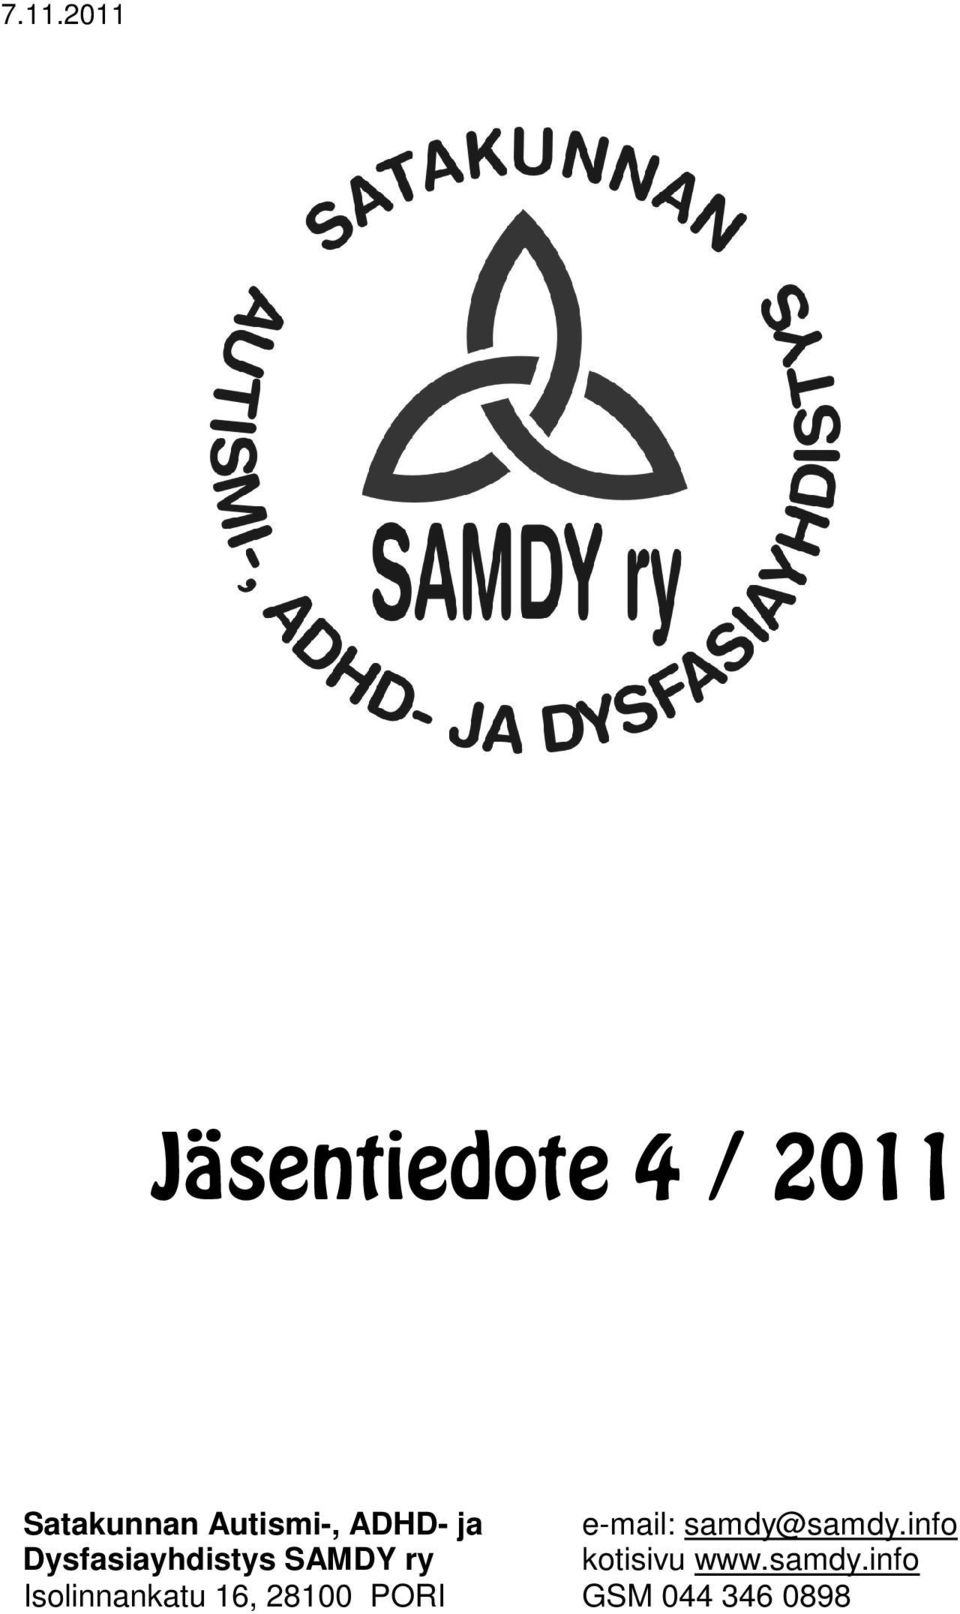 info Dysfasiayhdistys SAMDY ry kotisivu www.